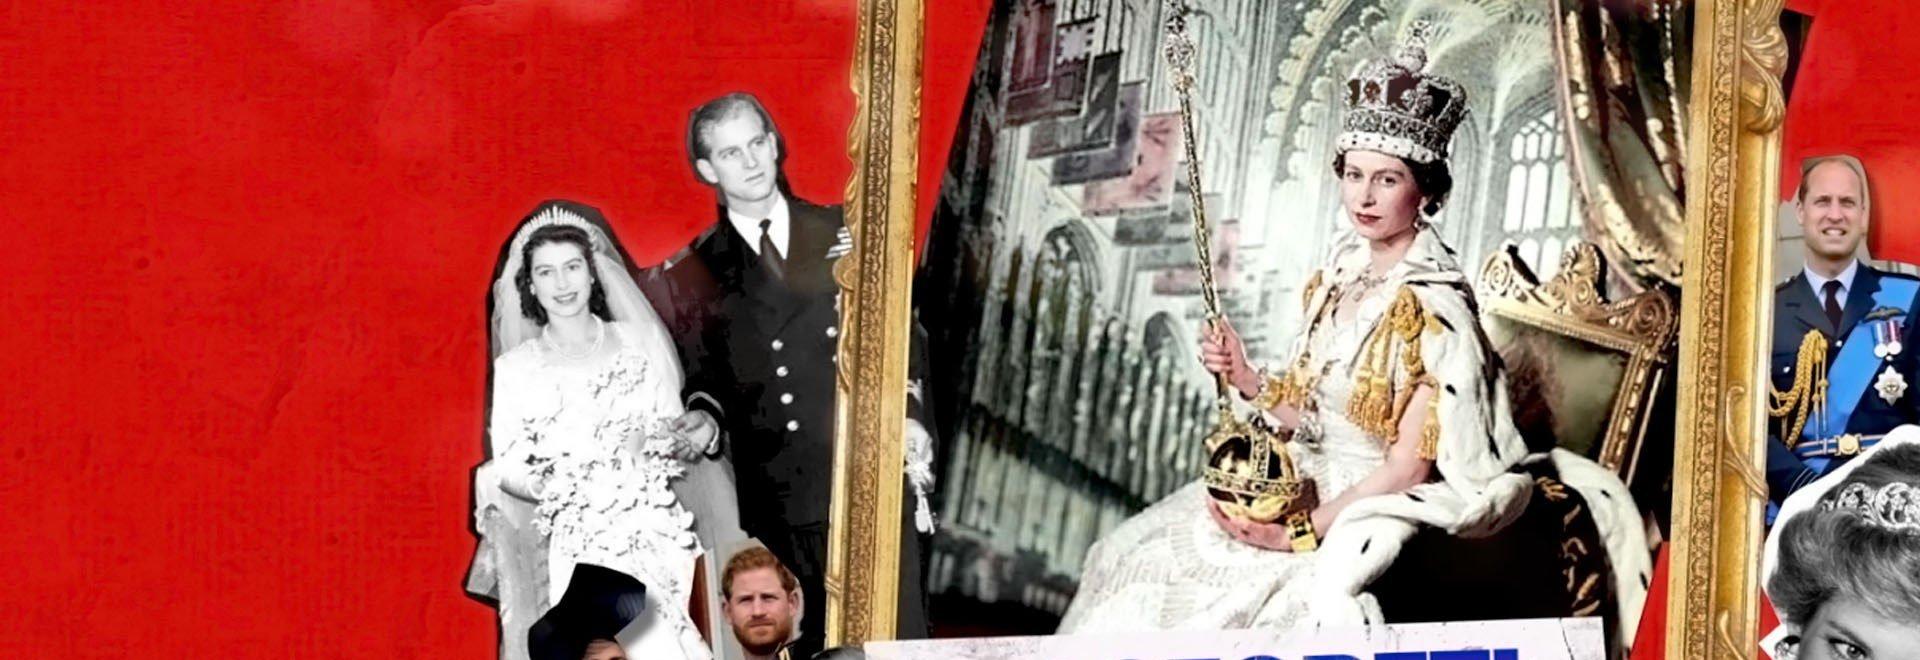 L'Incoronazione di Elisabetta II